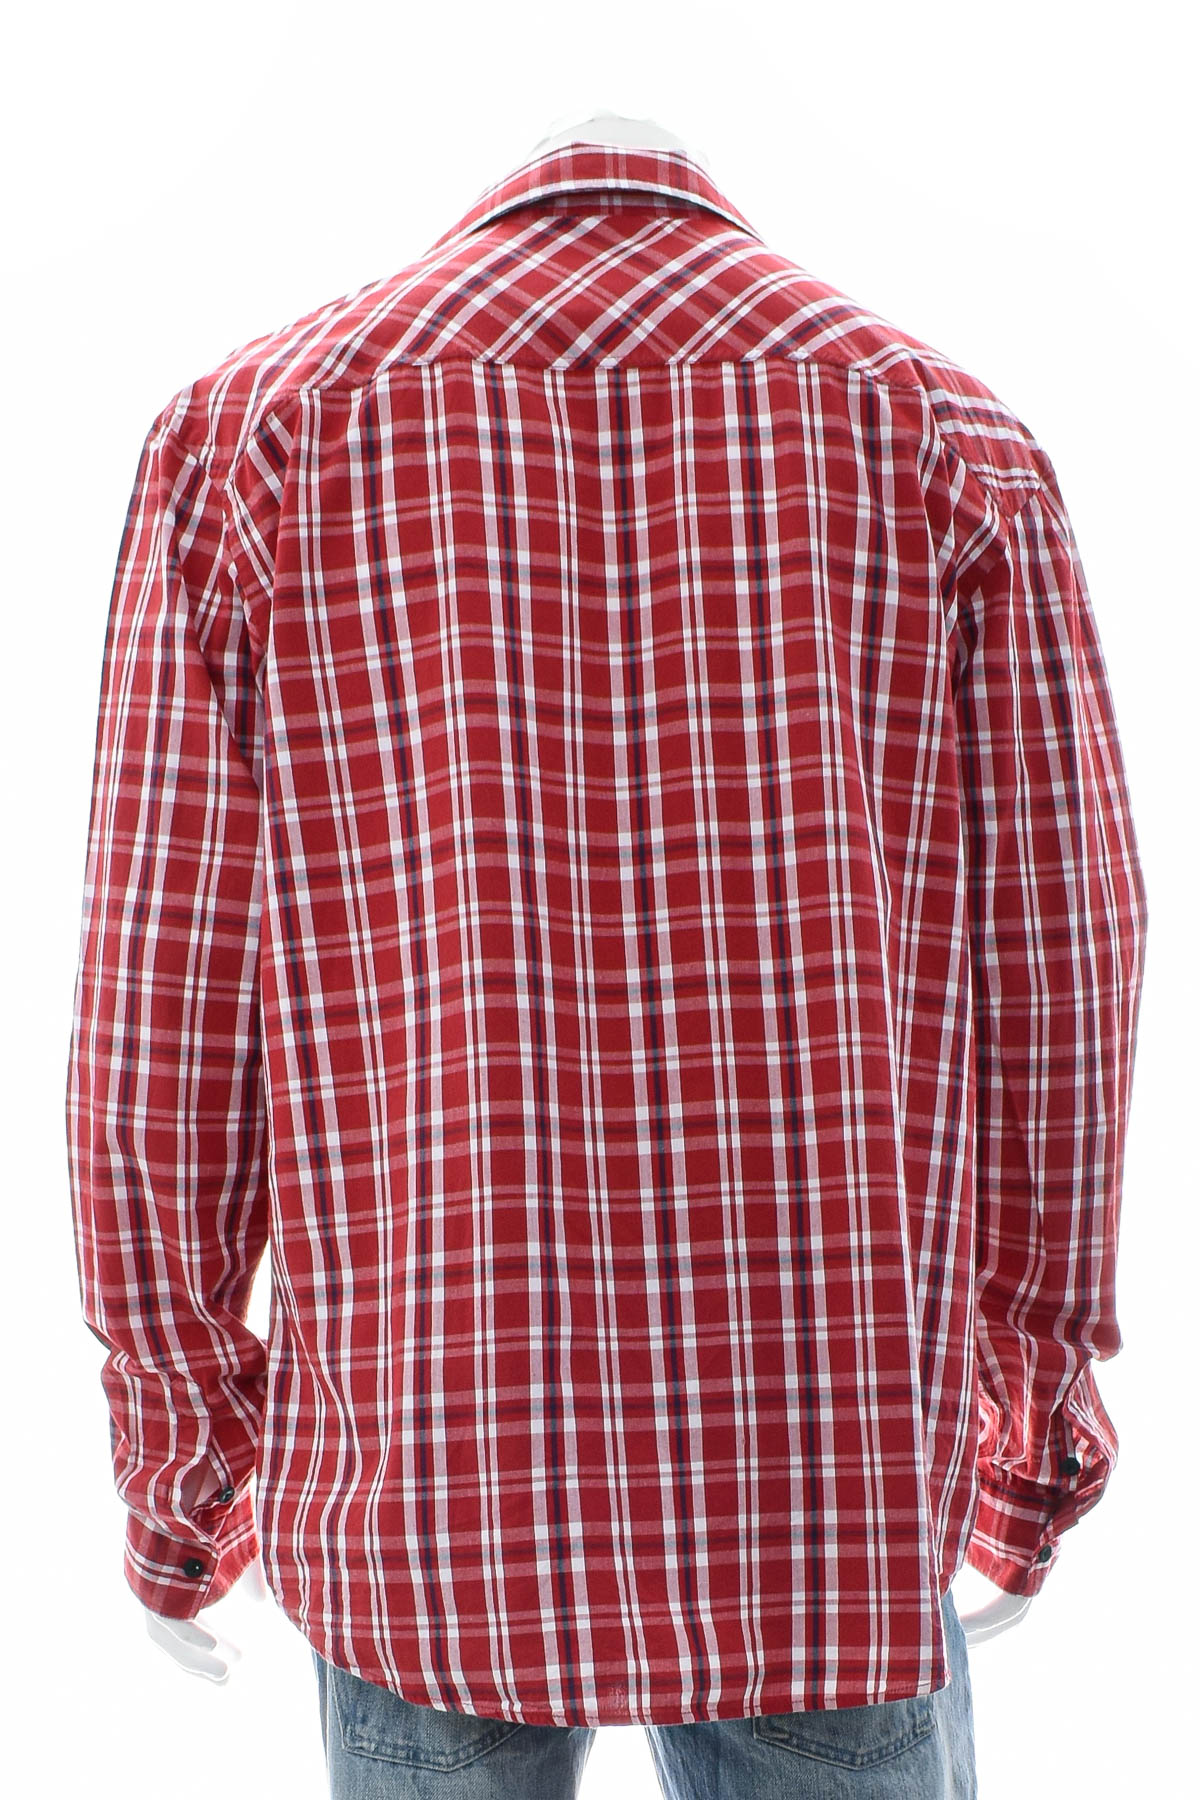 Men's shirt - Salomon - 1